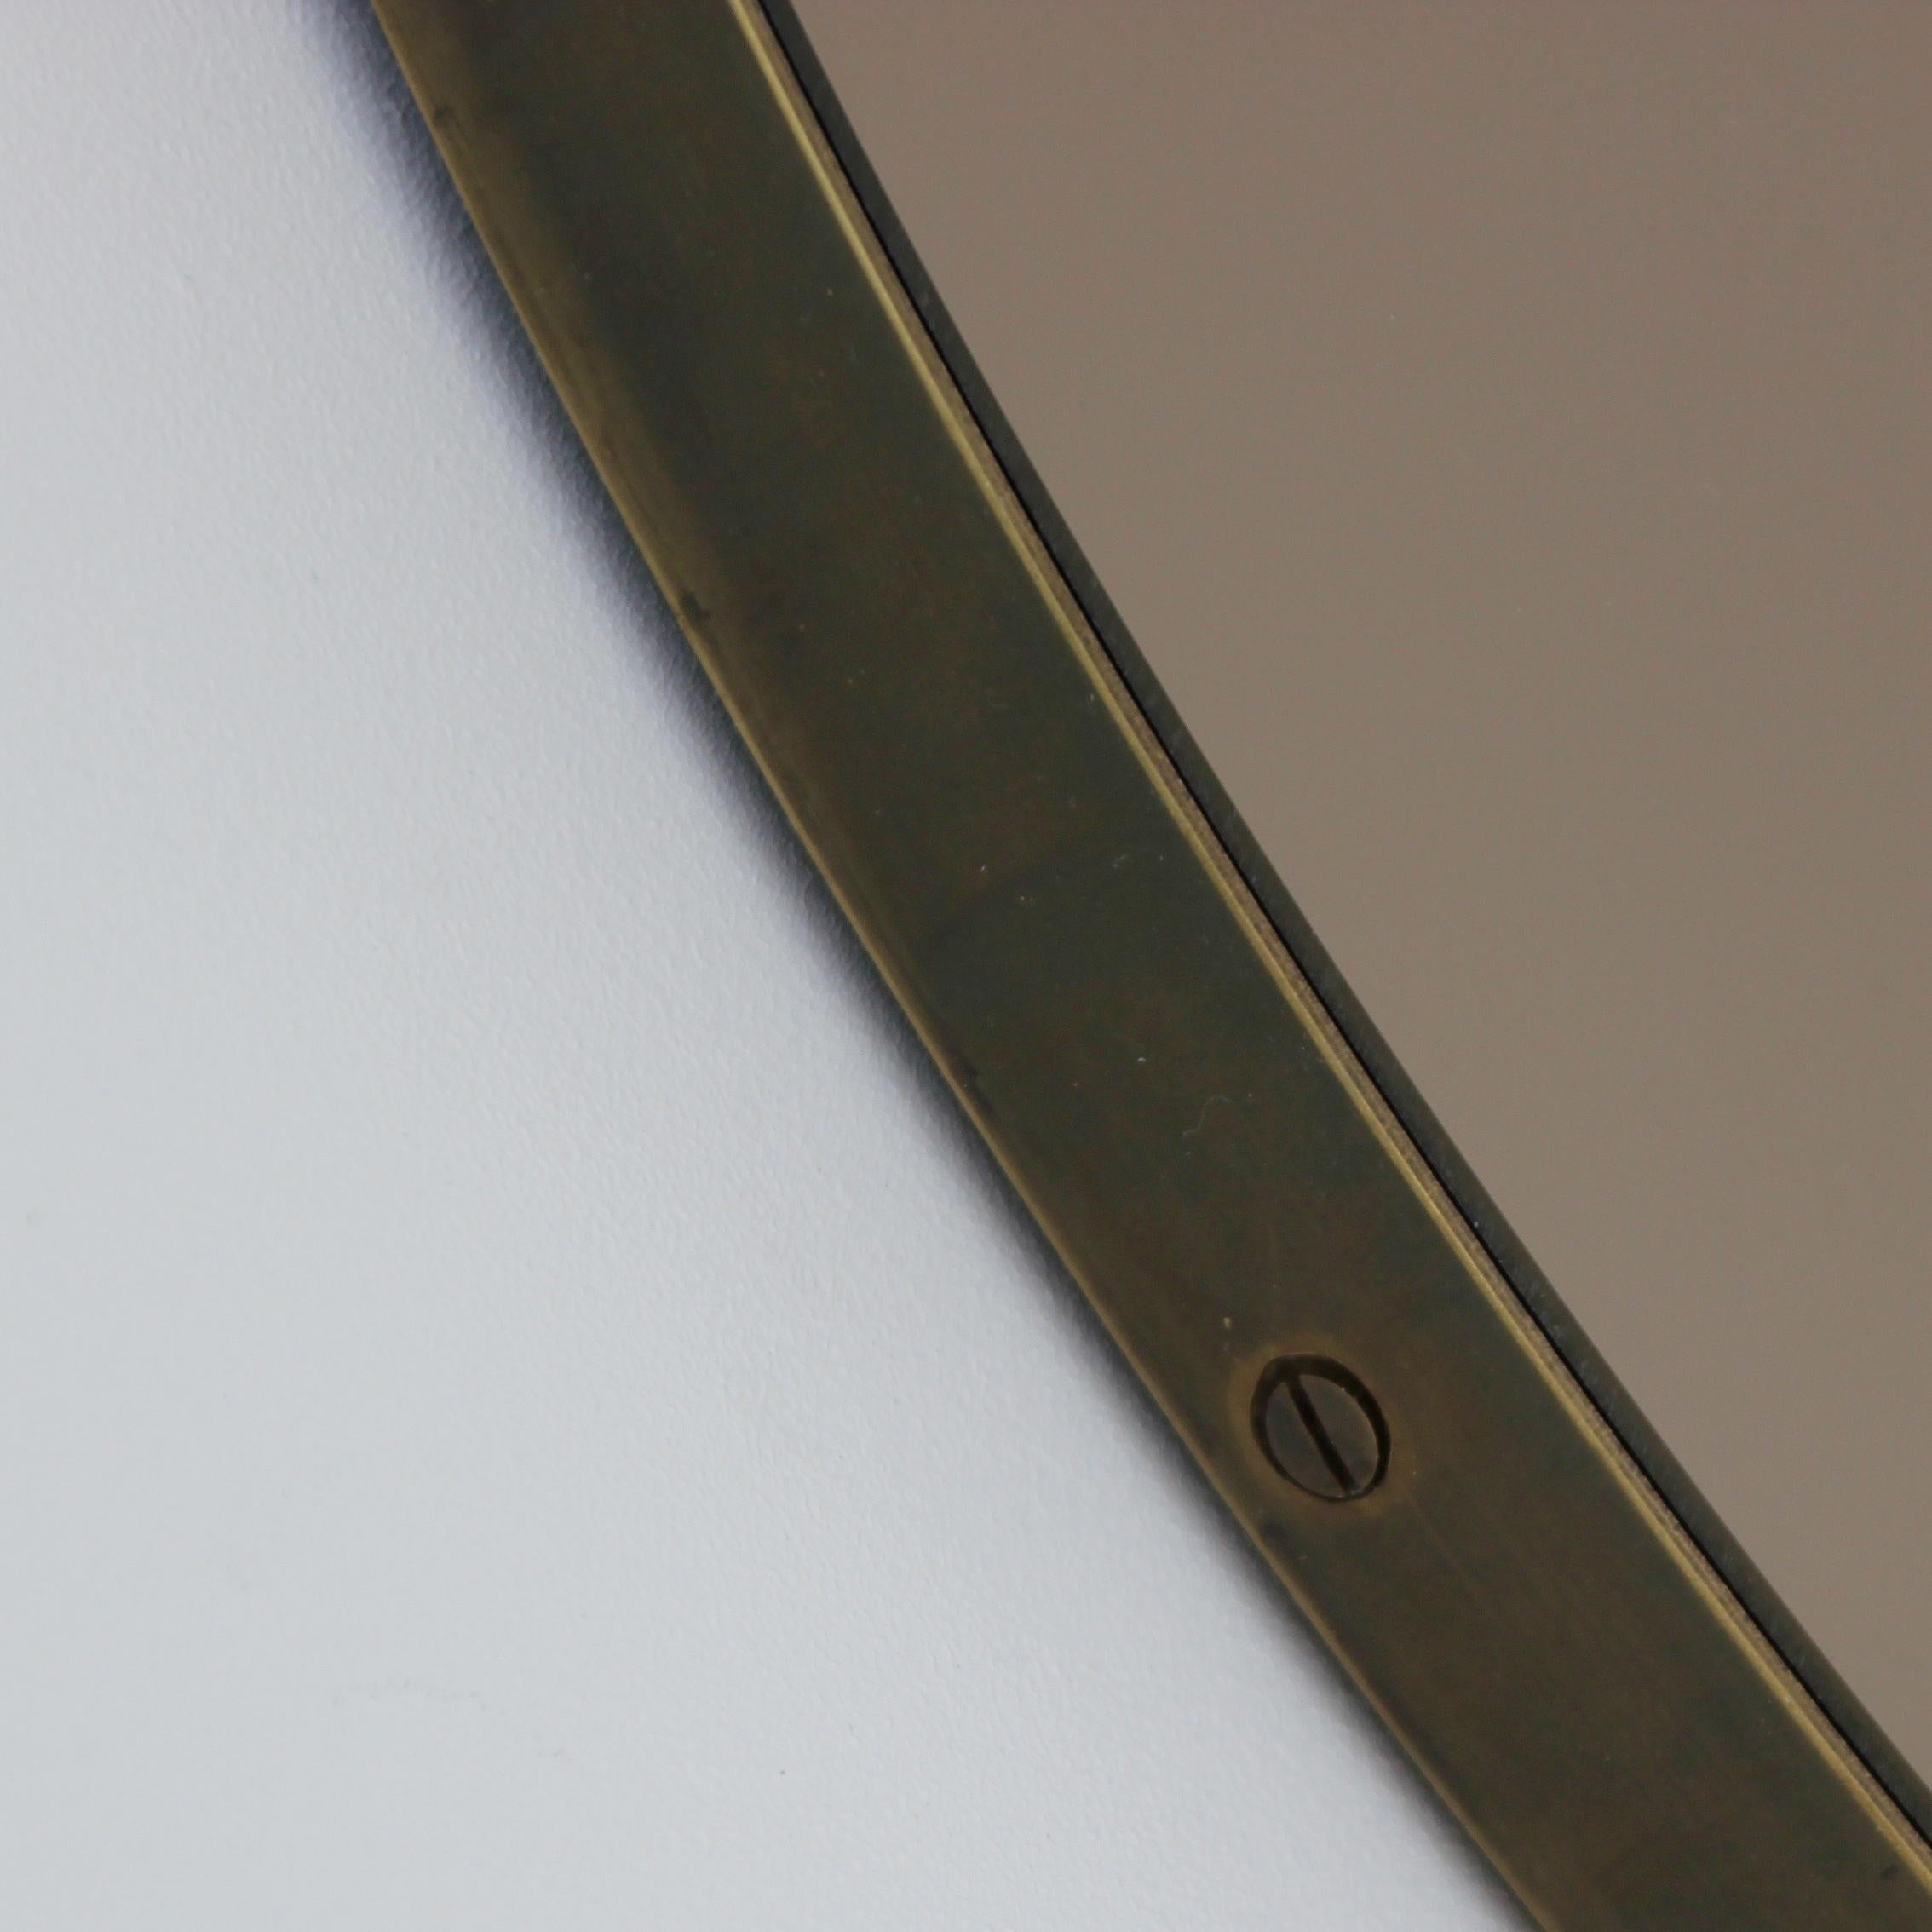 Organic Modern Orbis Bronze Tinted Round Contemporary Mirror with Bronze Patina Frame, Regular For Sale